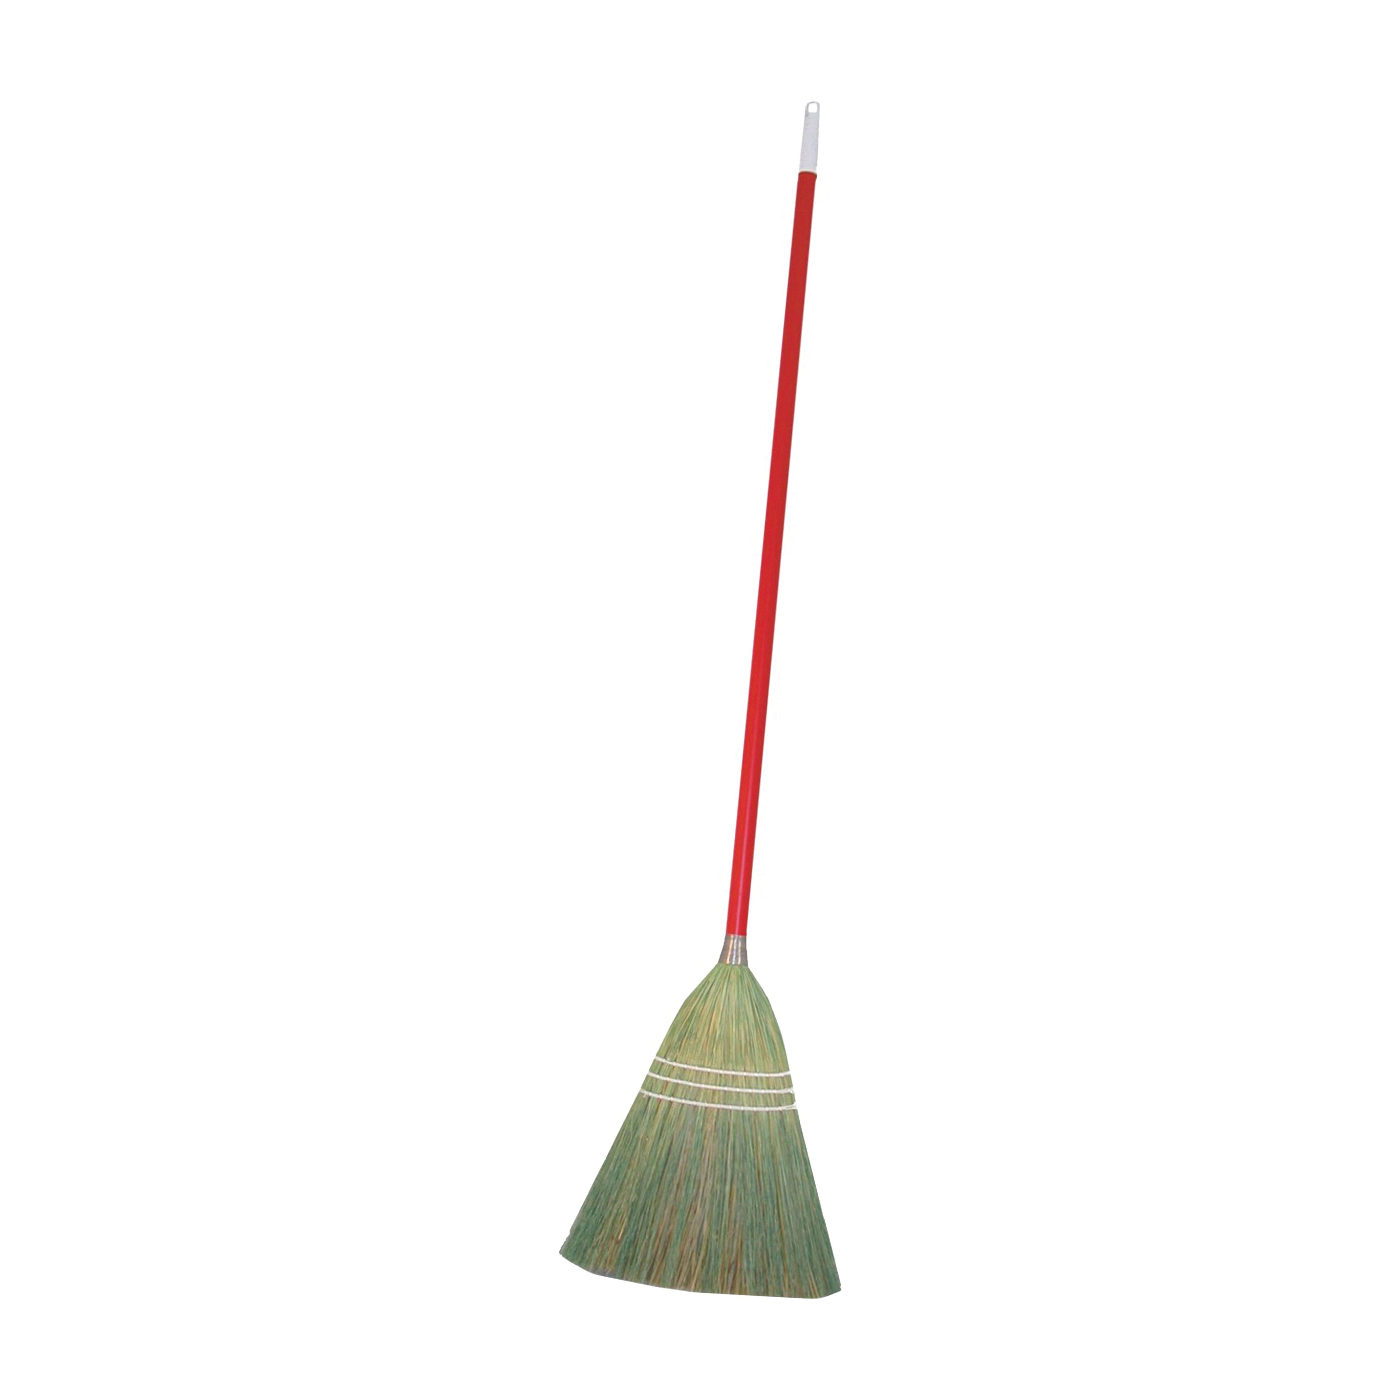 315-6 Economy Broom, Sotol Fiber Bristle, Assorted Bristle